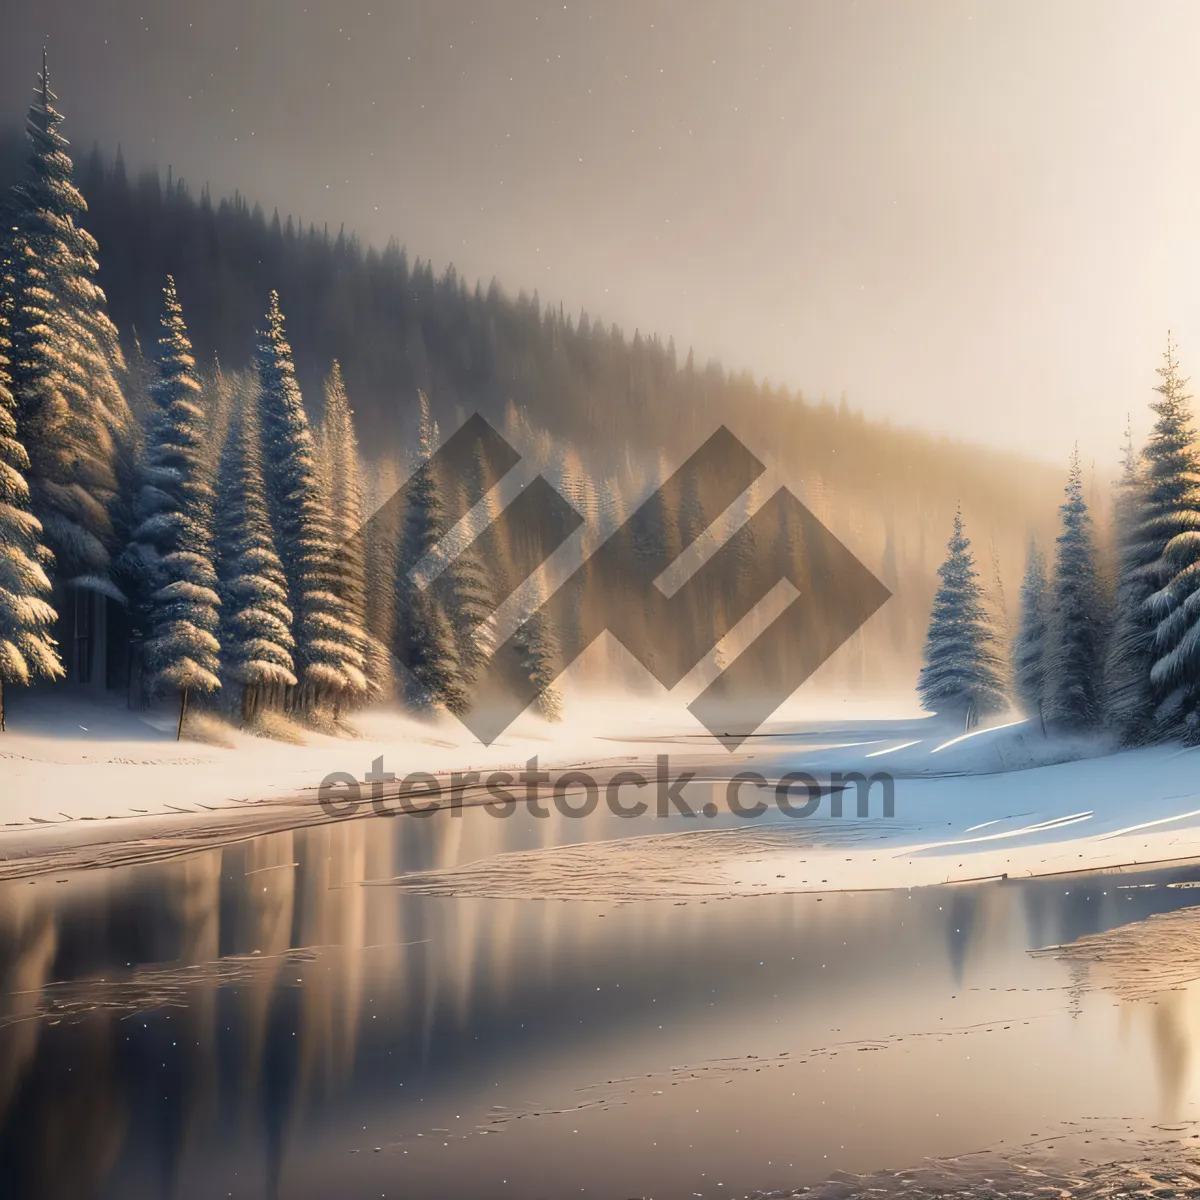 Picture of Winter Wonderland: Majestic Snowy Mountain Landscape